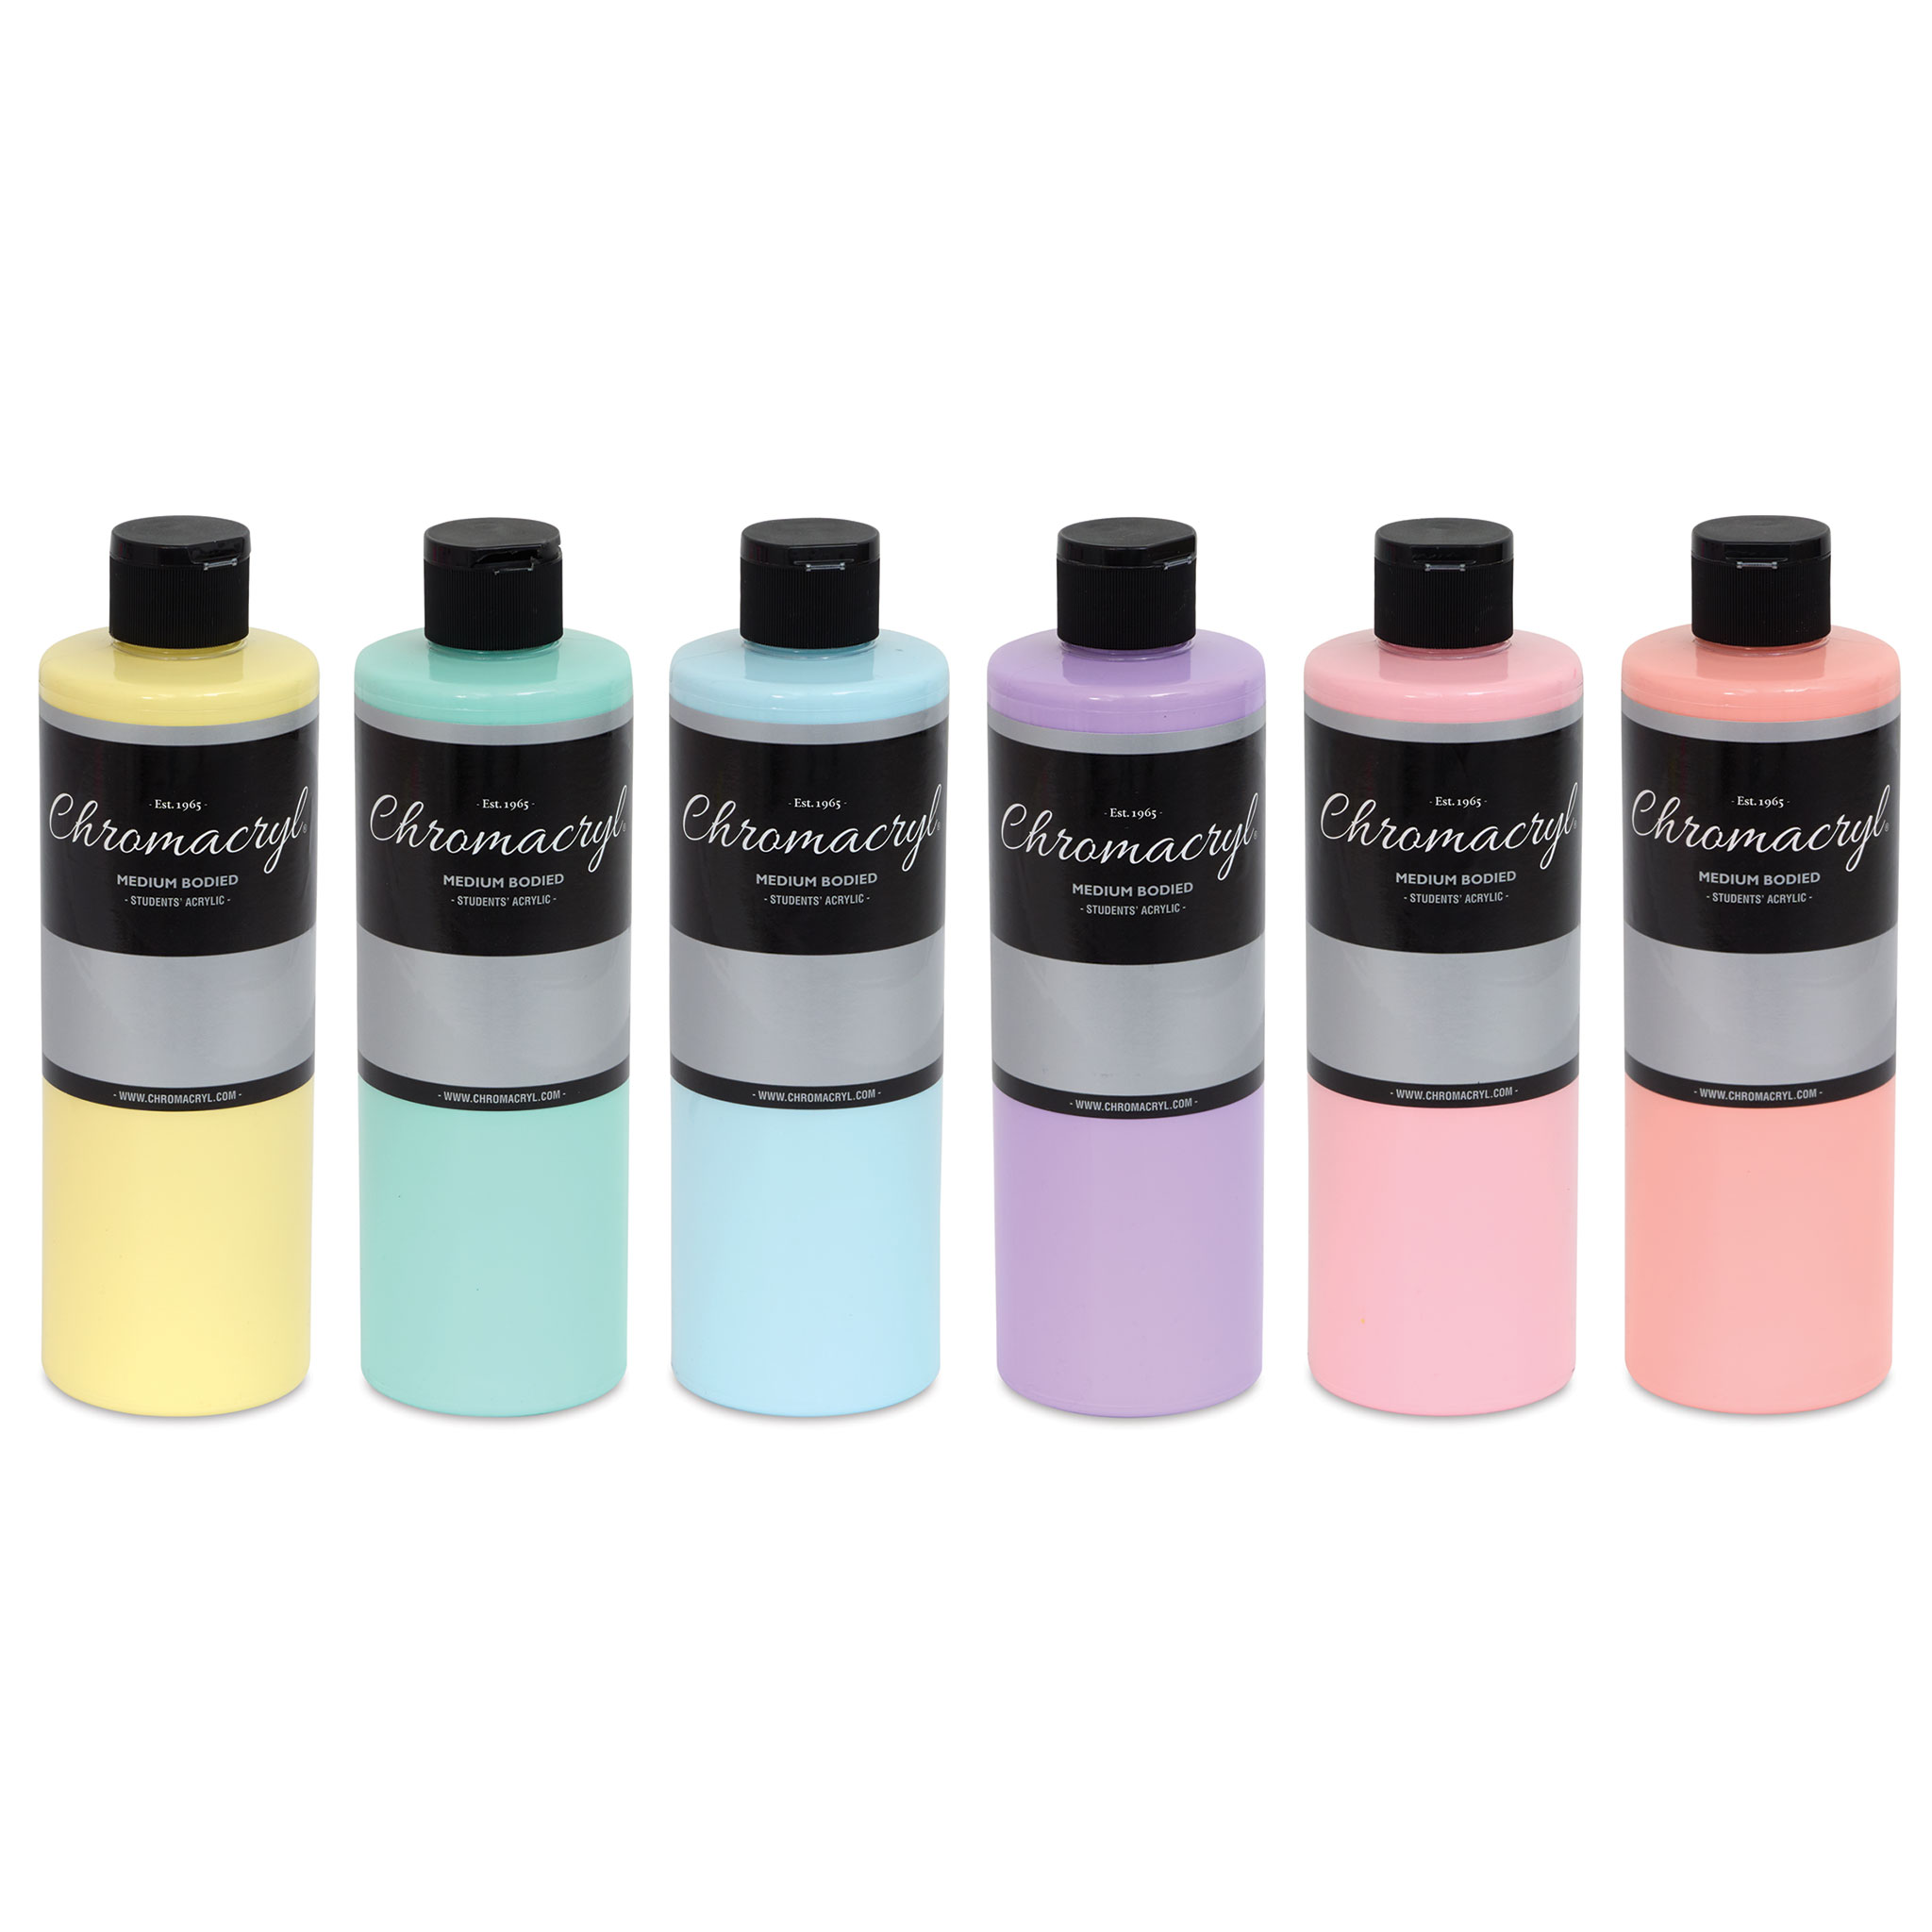 Chromacryl Premium Students Acrylic Paint Set 1 PT Assorted Primary Colors of 6